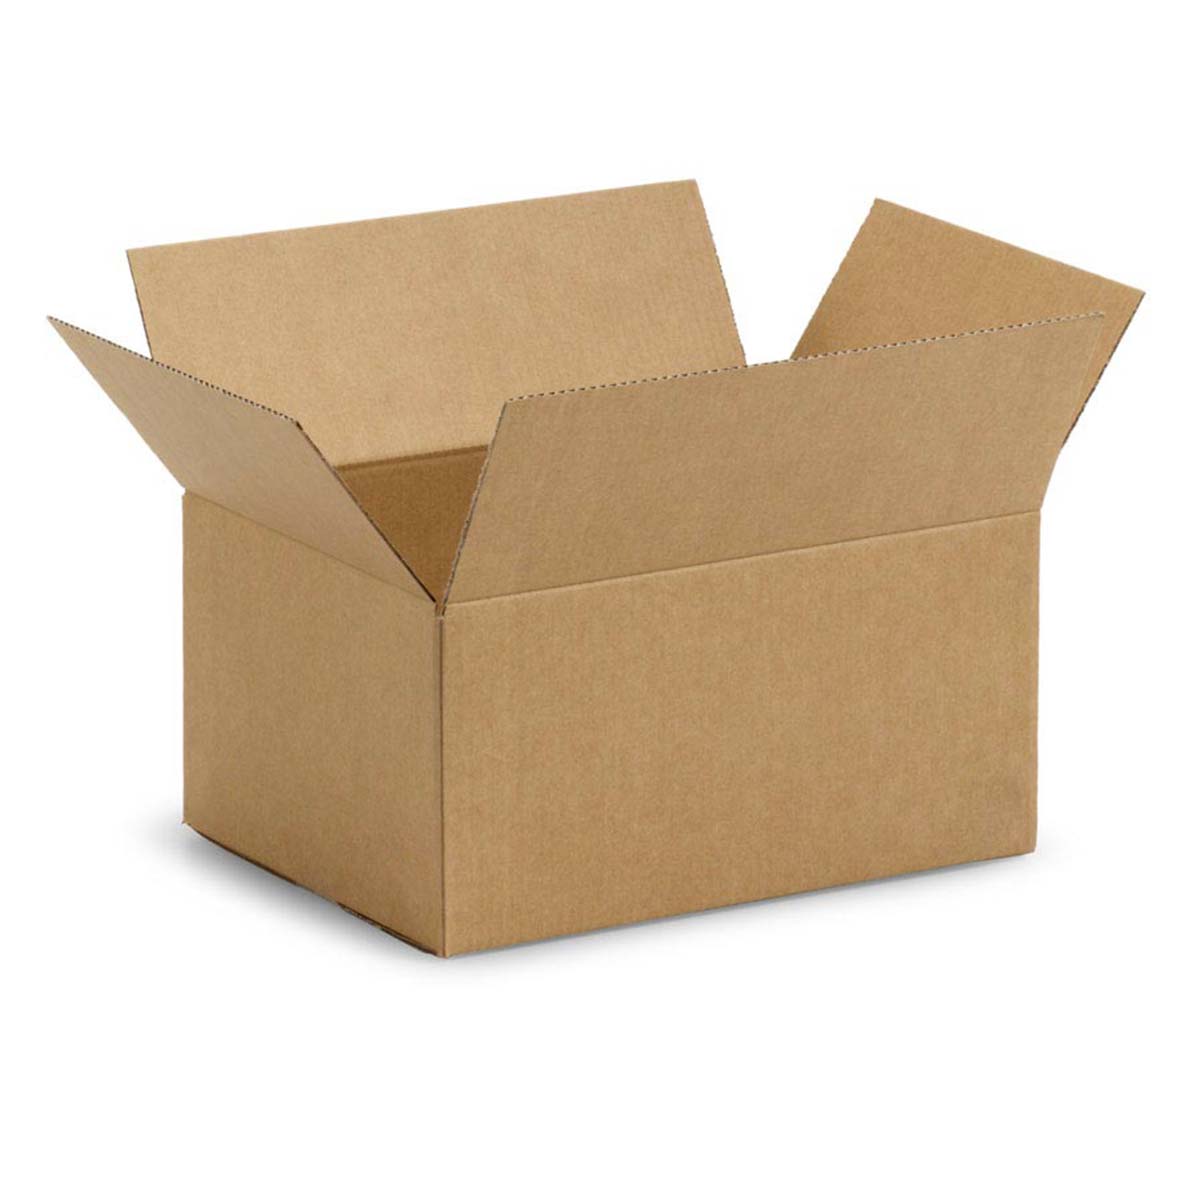 Cardboard box - 1